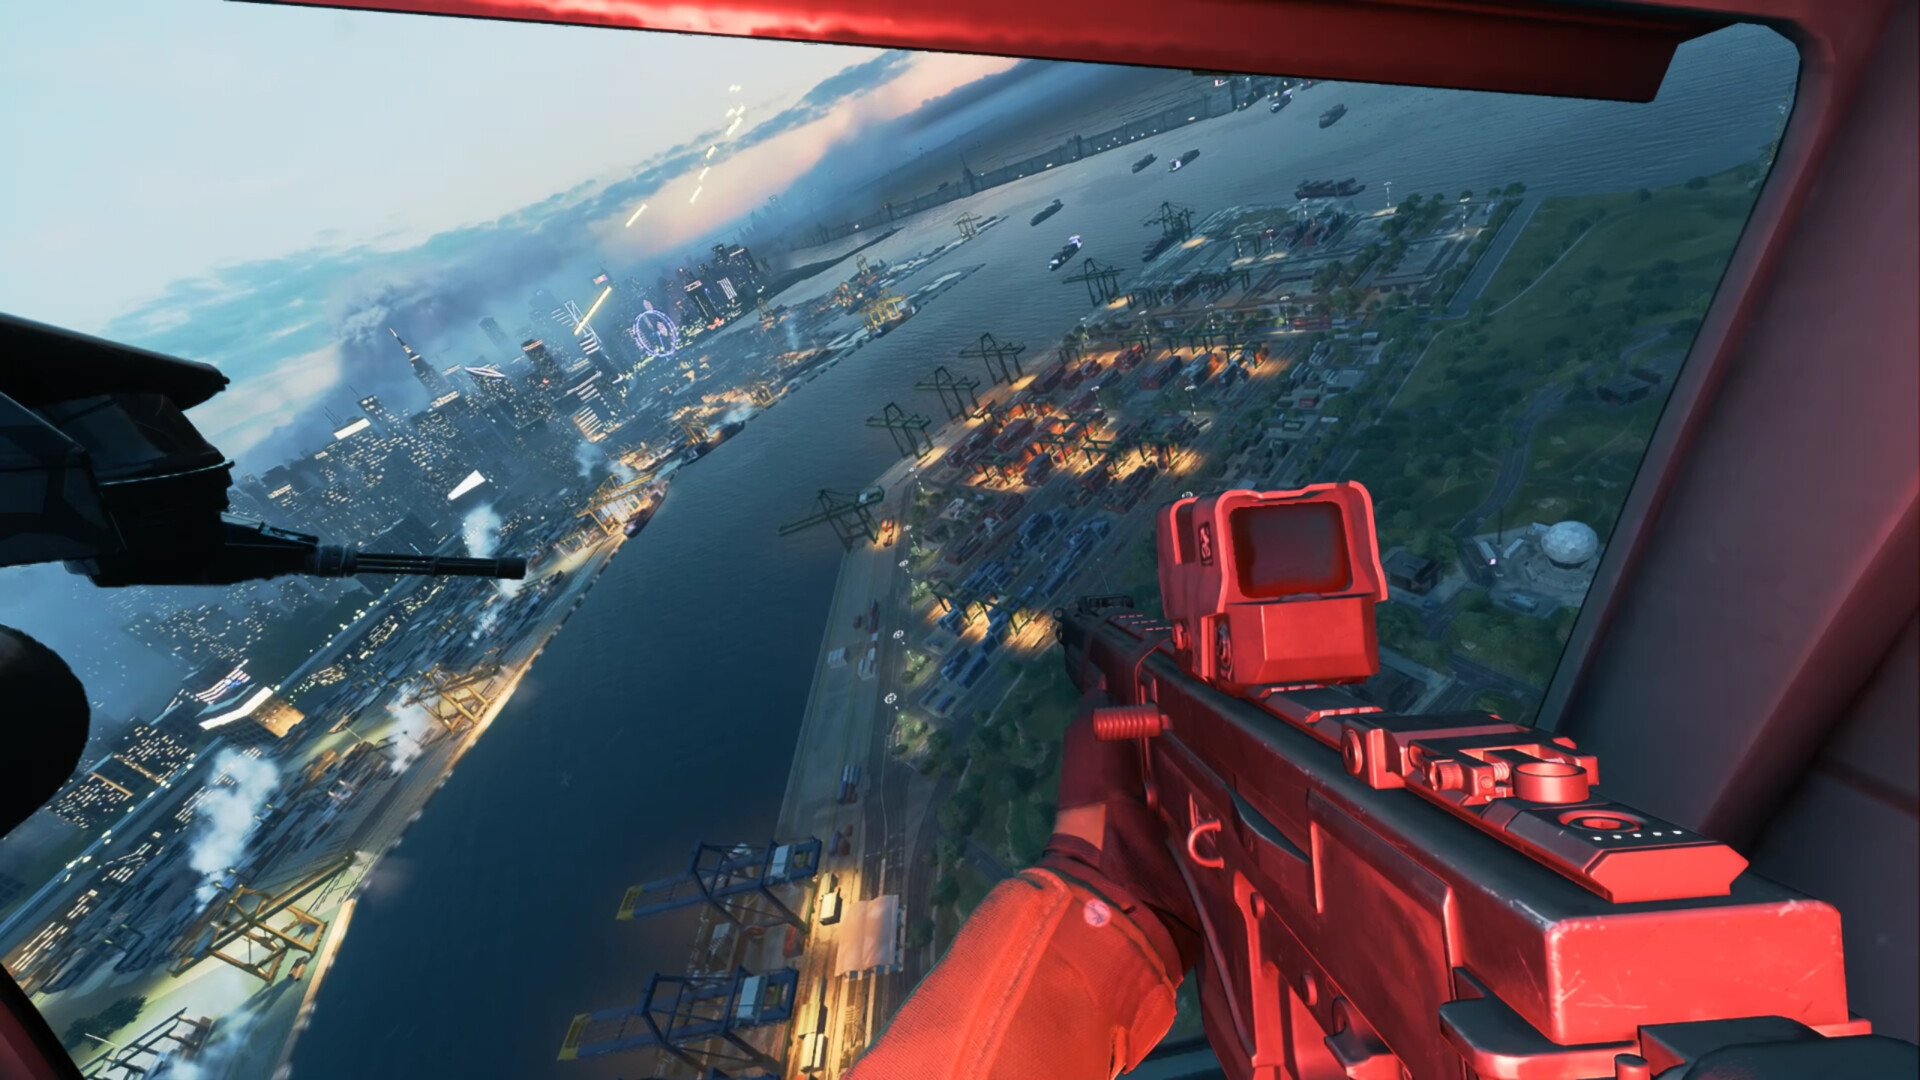 Battlefield 2042 gameplay footage reveals new abilities for returning  Battlefield 4 hero